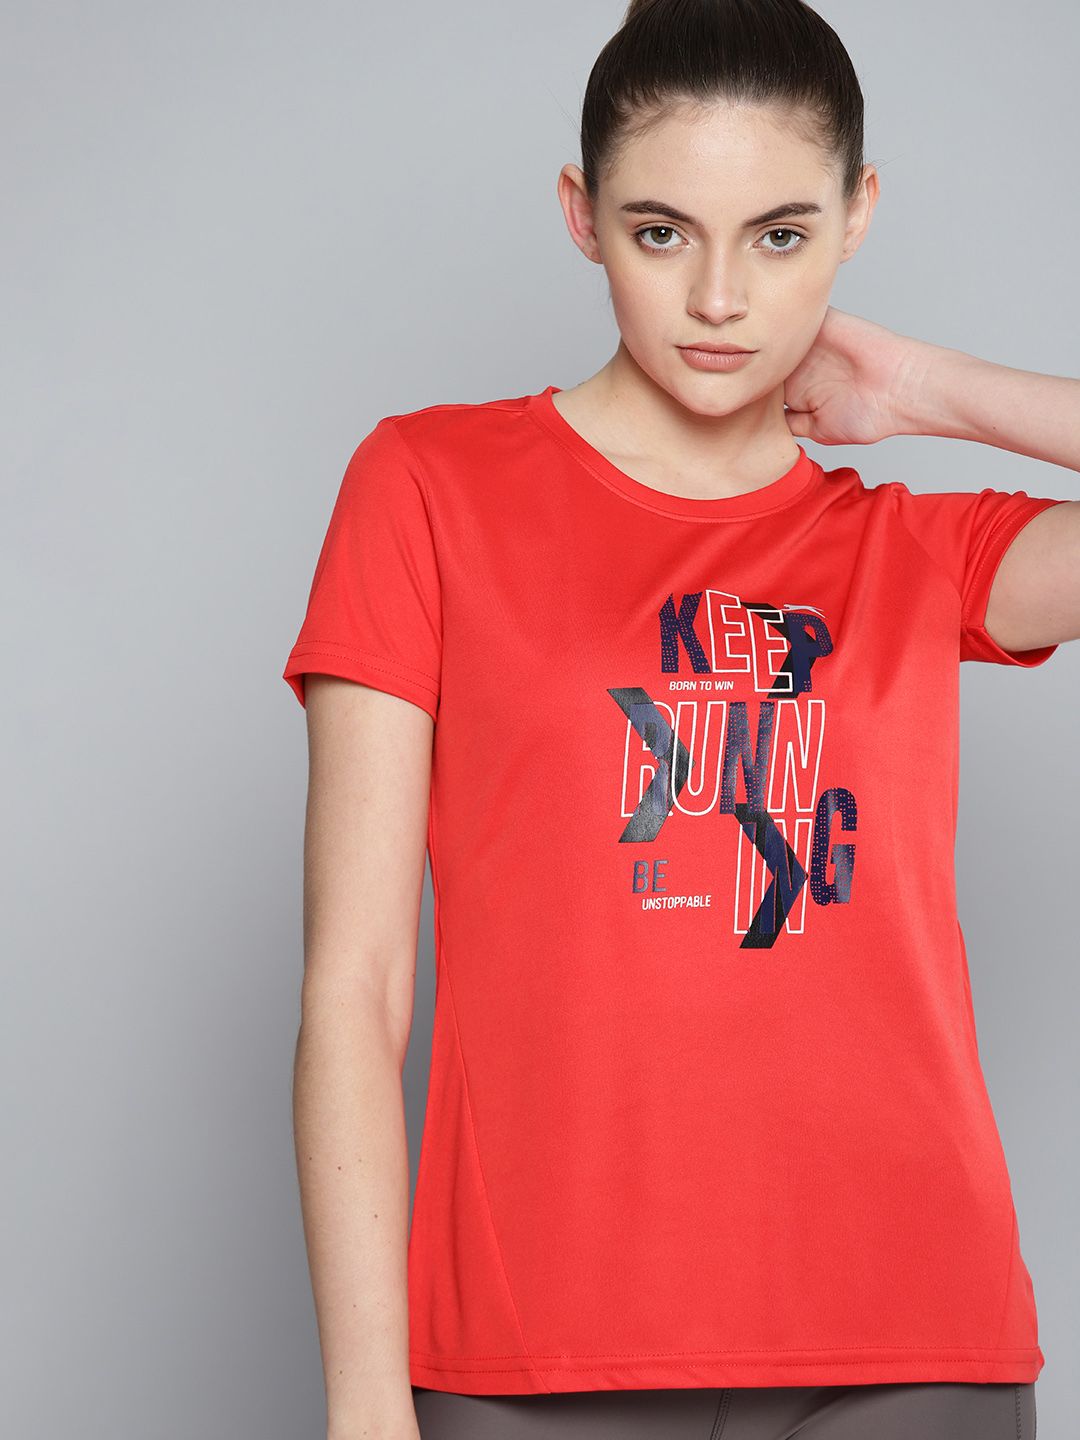 Slazenger Women Red & Navy Blue Printed Running T-shirt Price in India